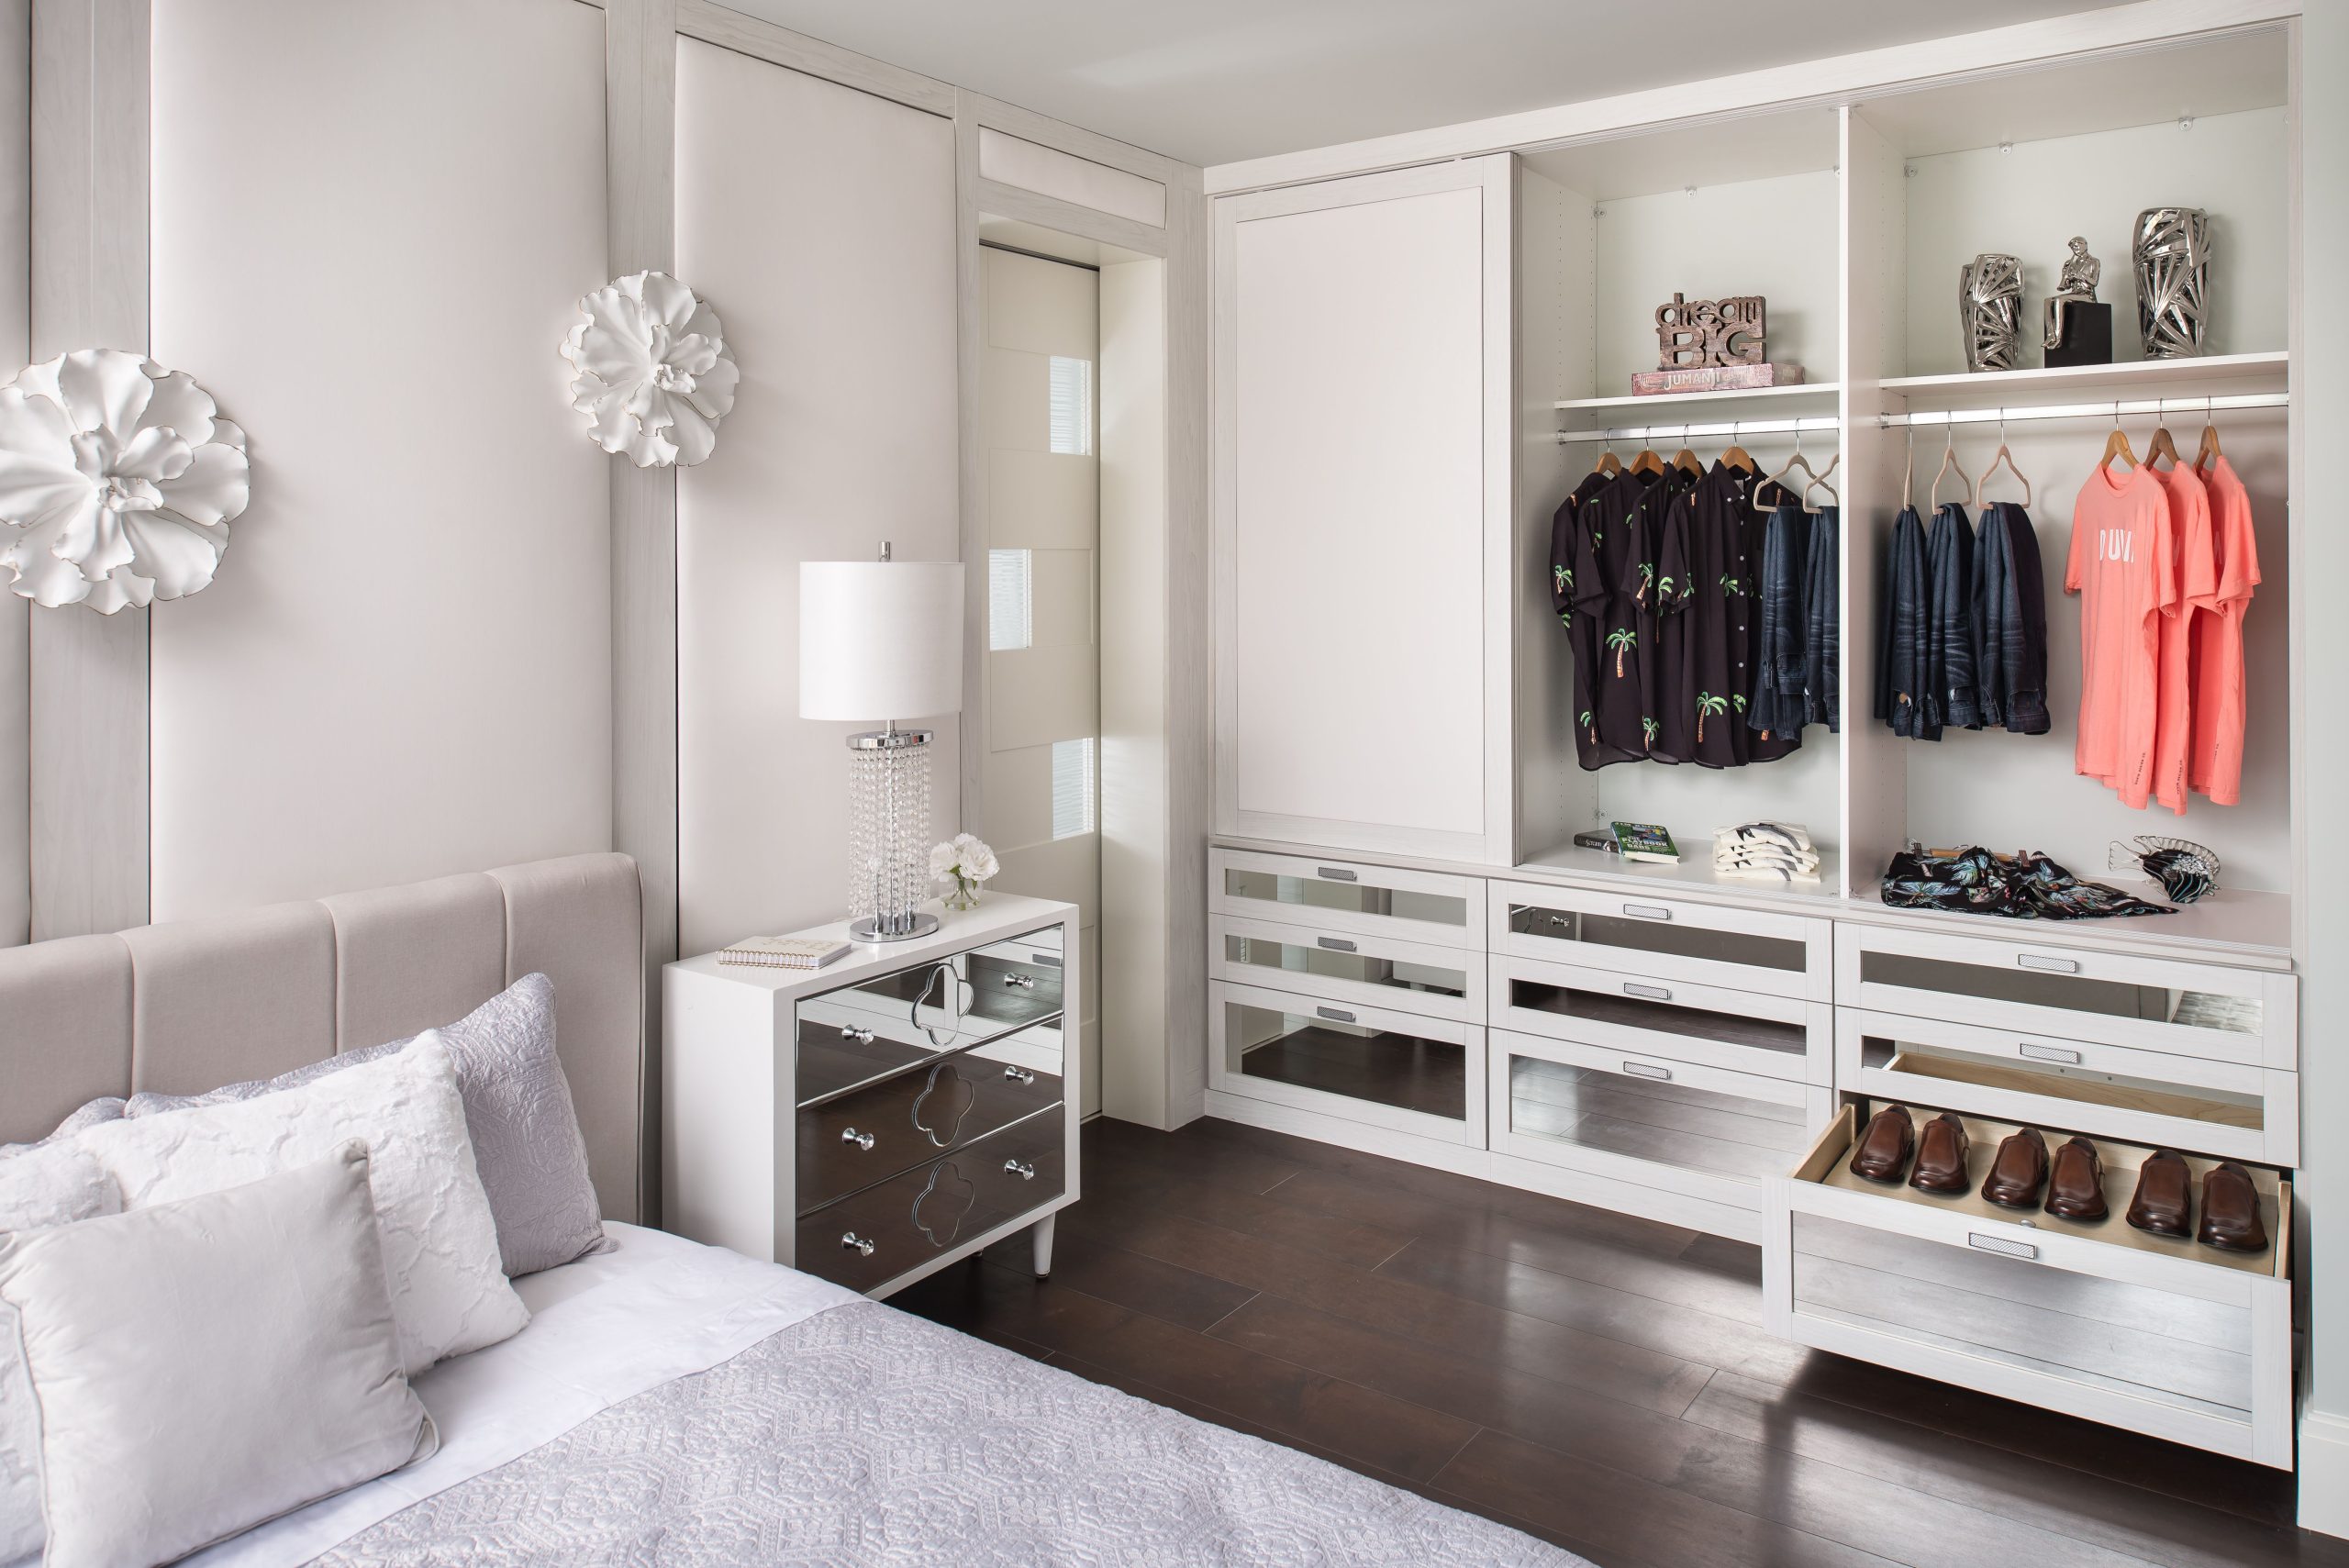 Are Built-in Custom Wardrobe Cabinets Worth It?